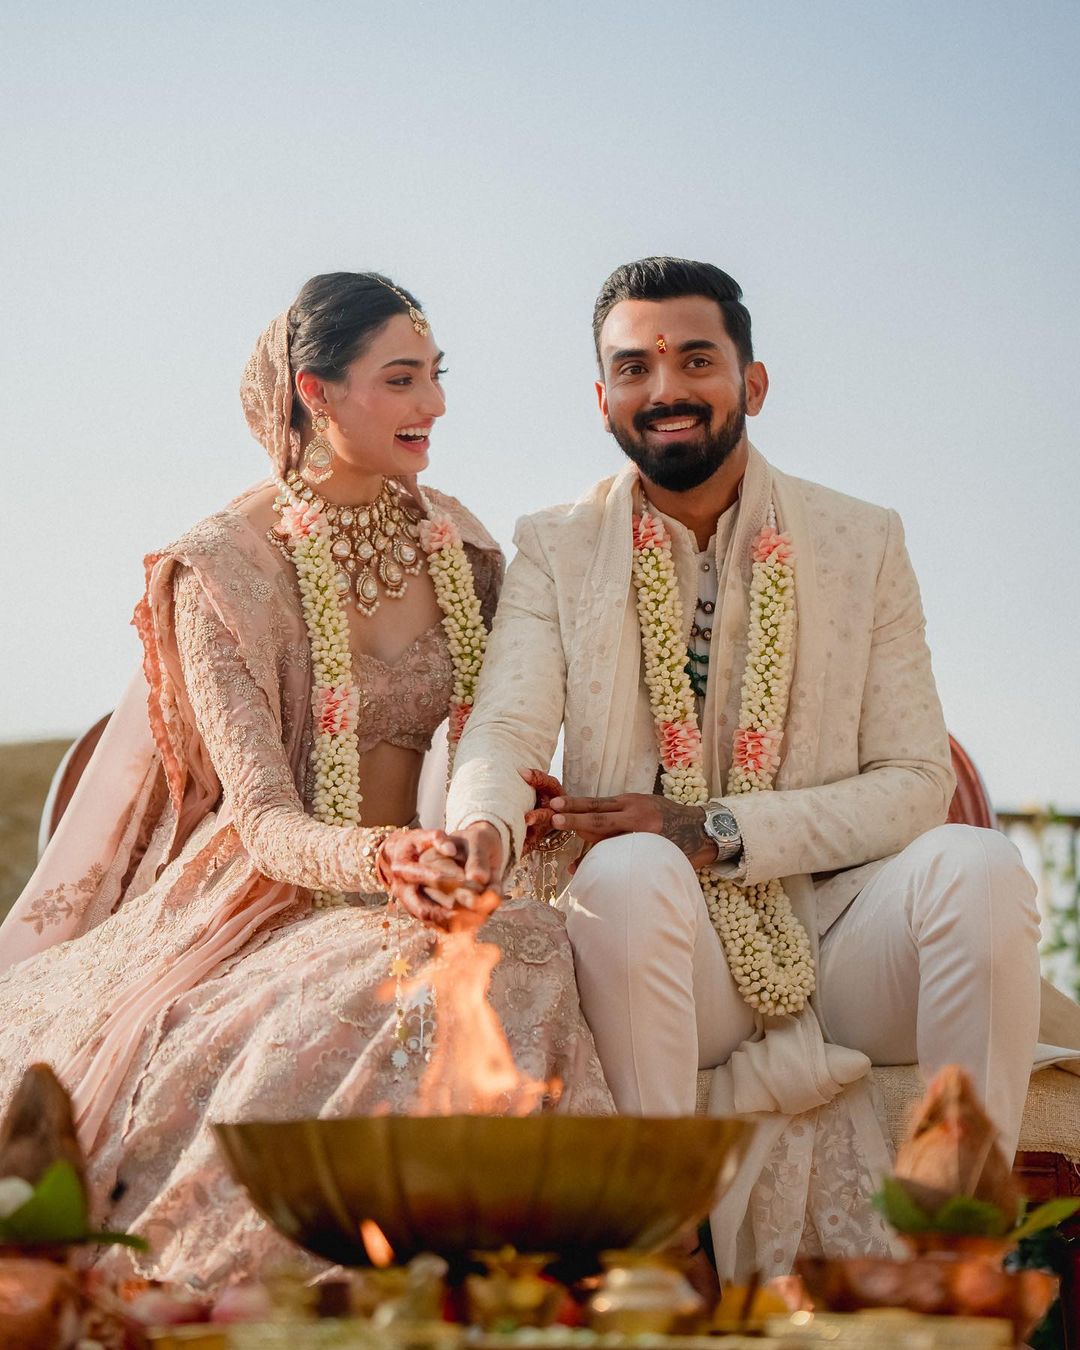 Stylish Lehengas Under INR 10,000 For Bride-To-Be in Mumbai